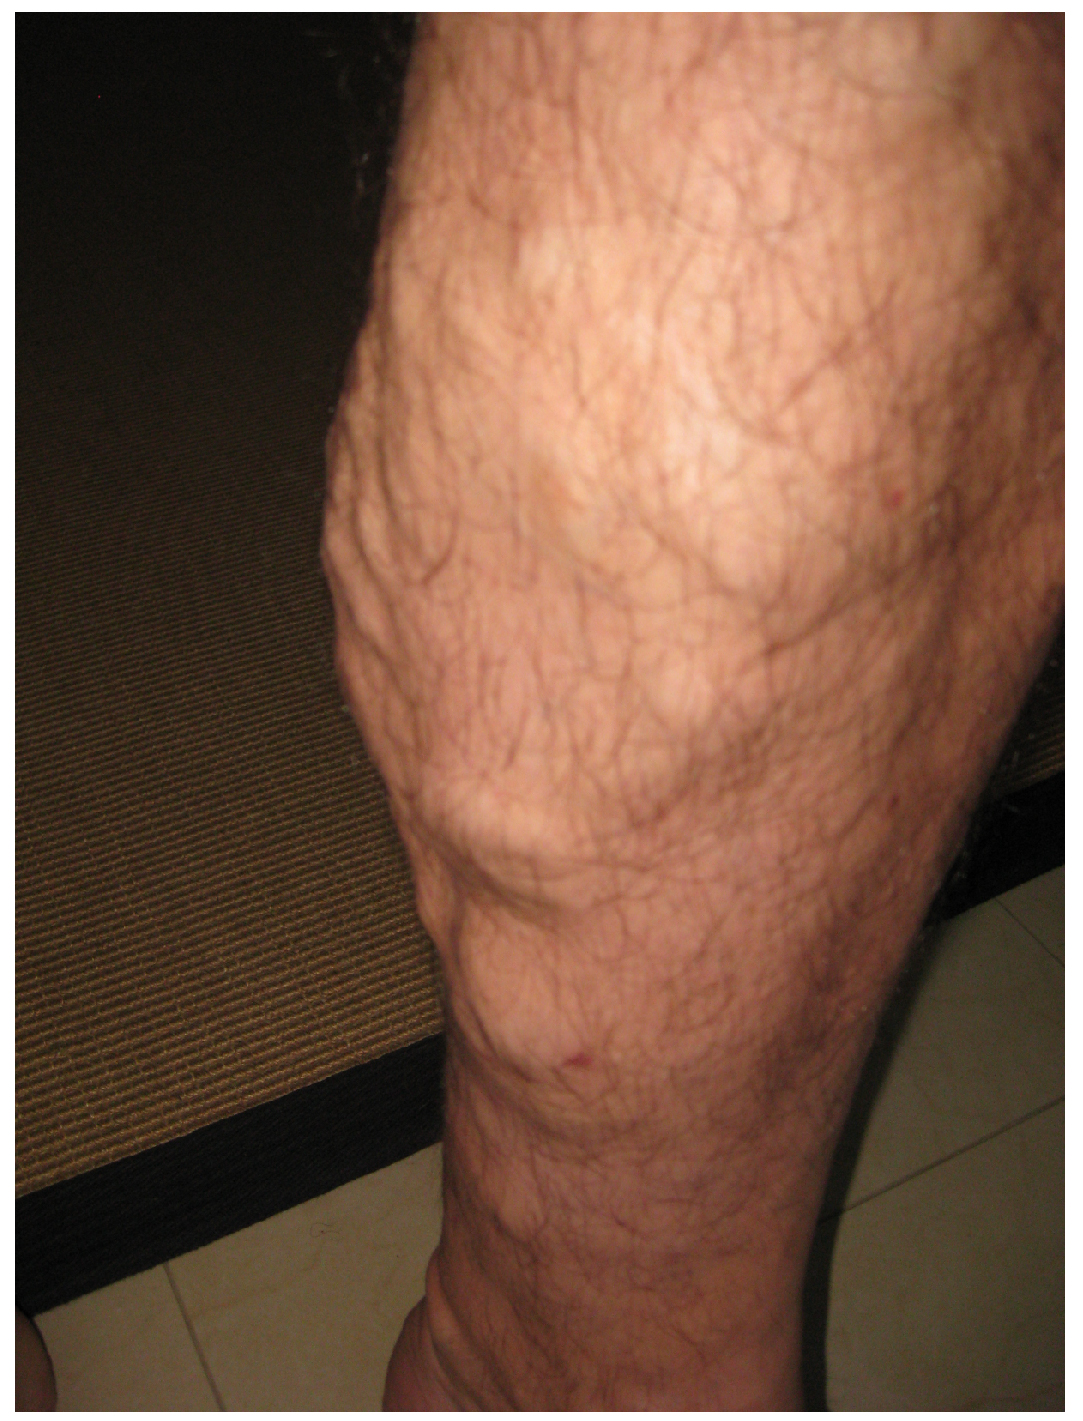 Photograph of patient's varicose veins